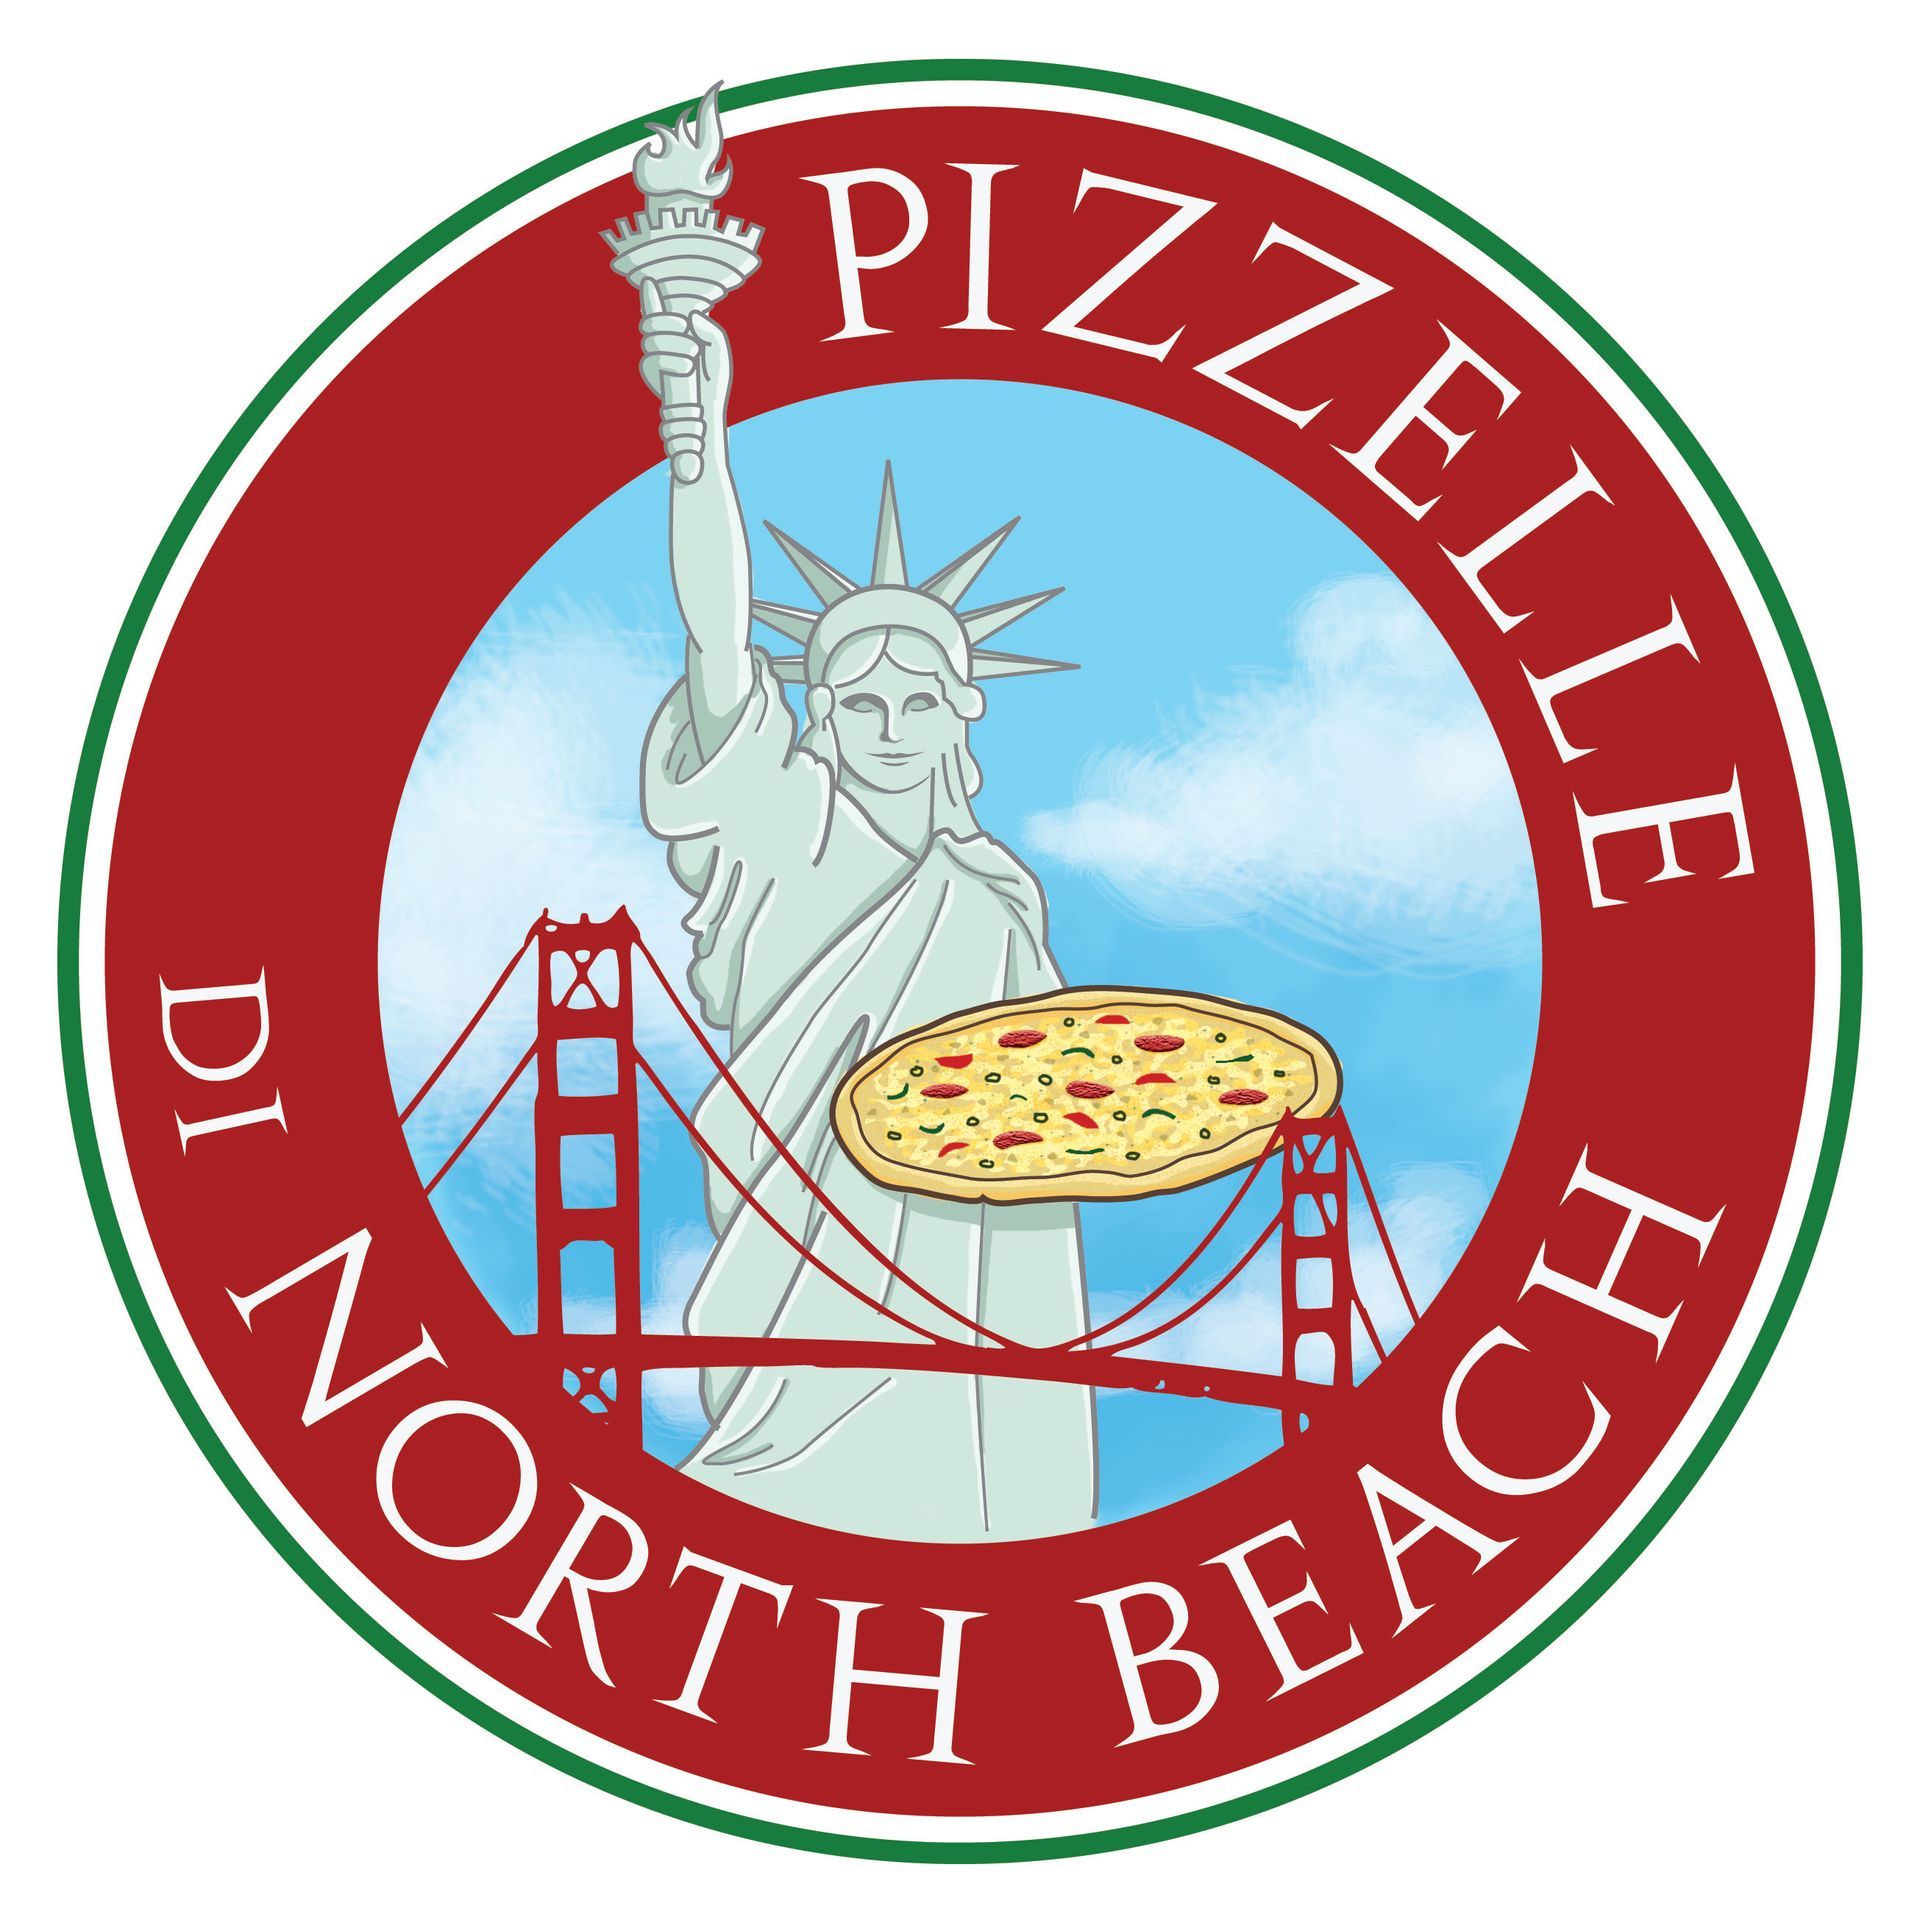 a pizza logo for pizzellie di north beach